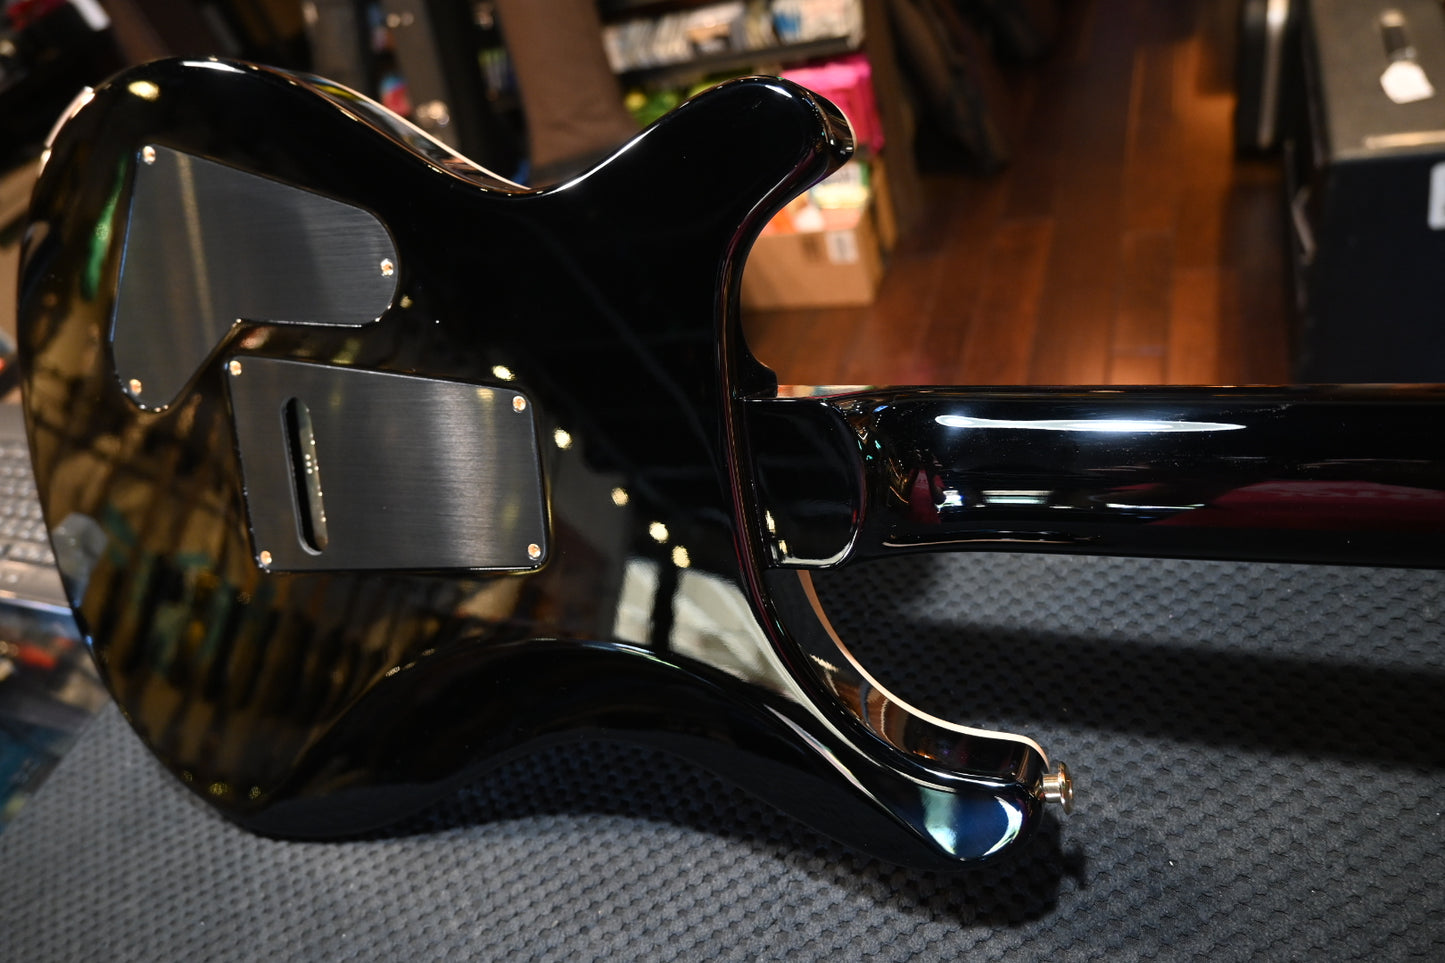 PRS Custom 24-08 10-Top - Faded Whale Blue Guitar #9818 - Danville Music